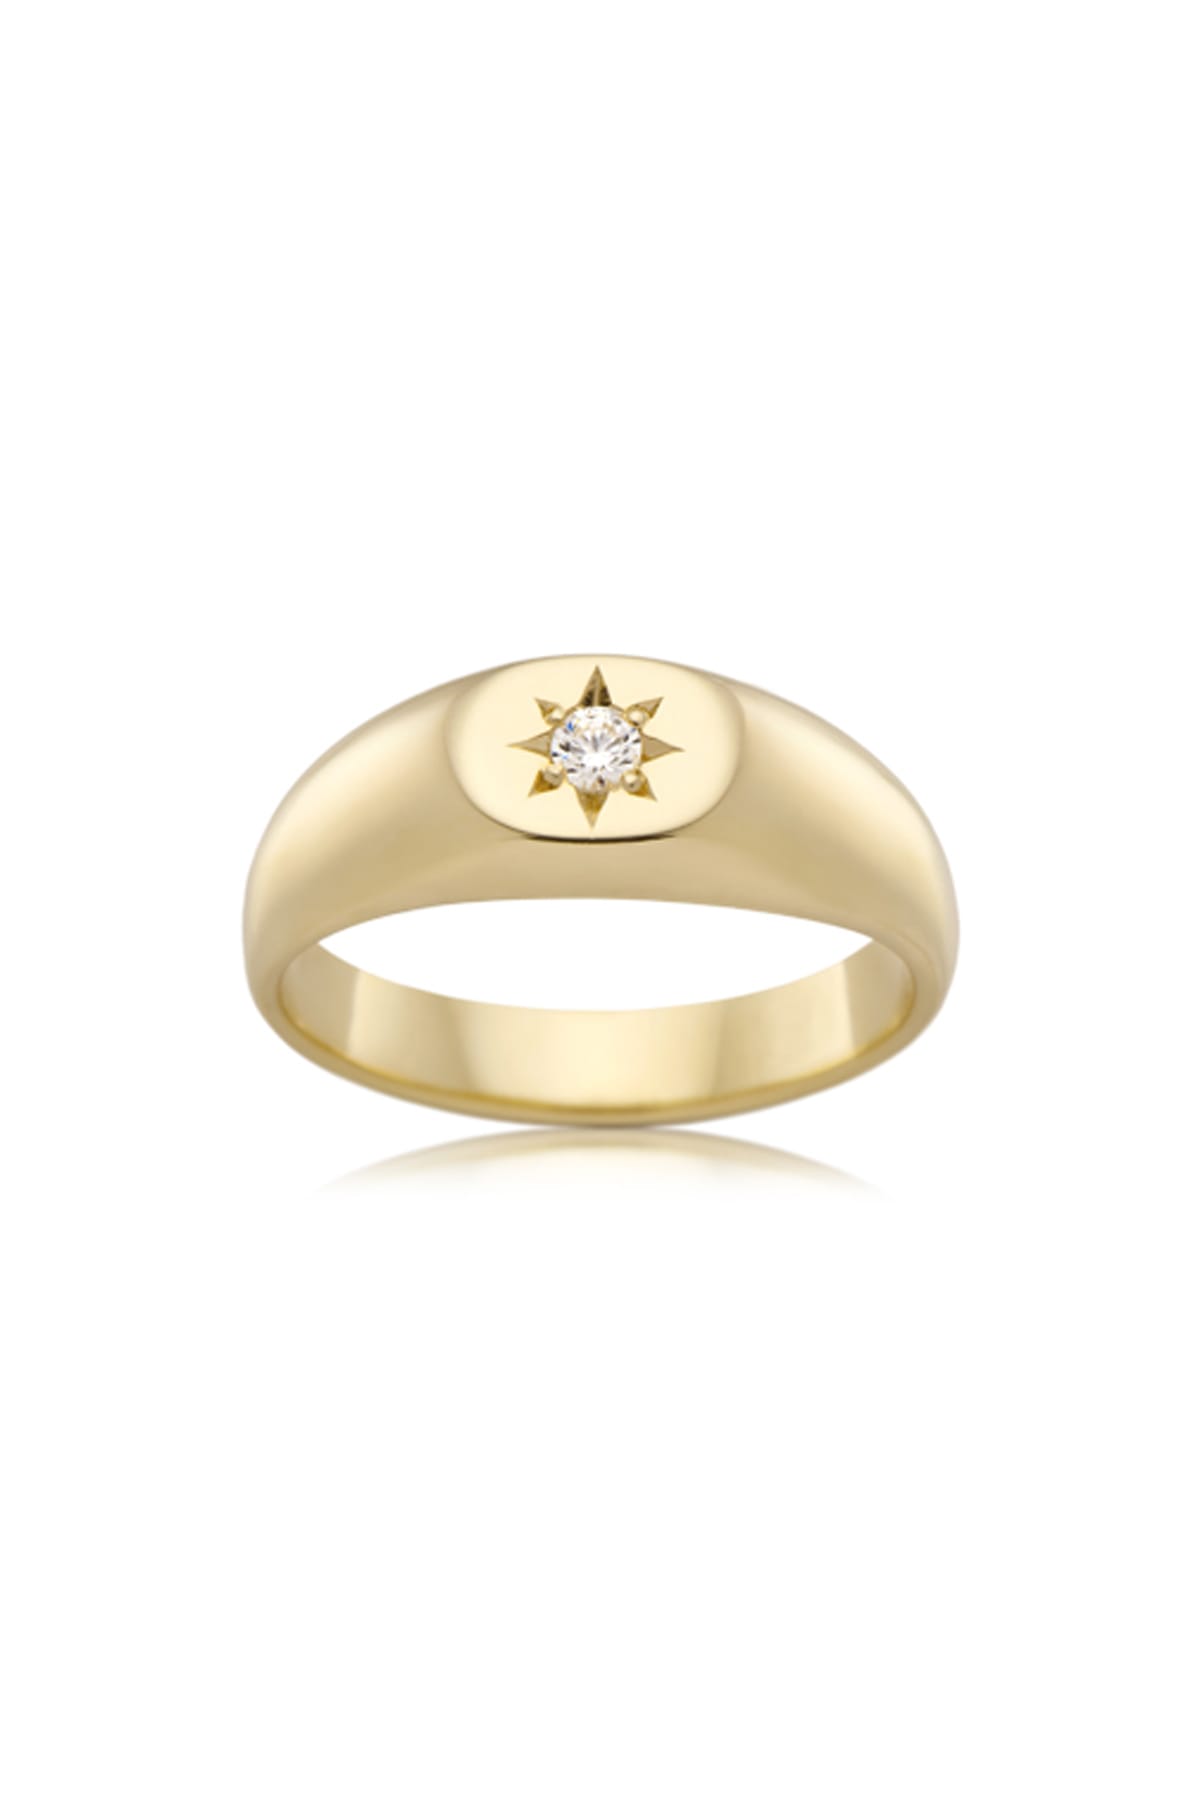 Diamond Star-Set Oval Flat Top Signet Ring available at LeGassick Diamonds and Jewellery Gold Coast, Australia.